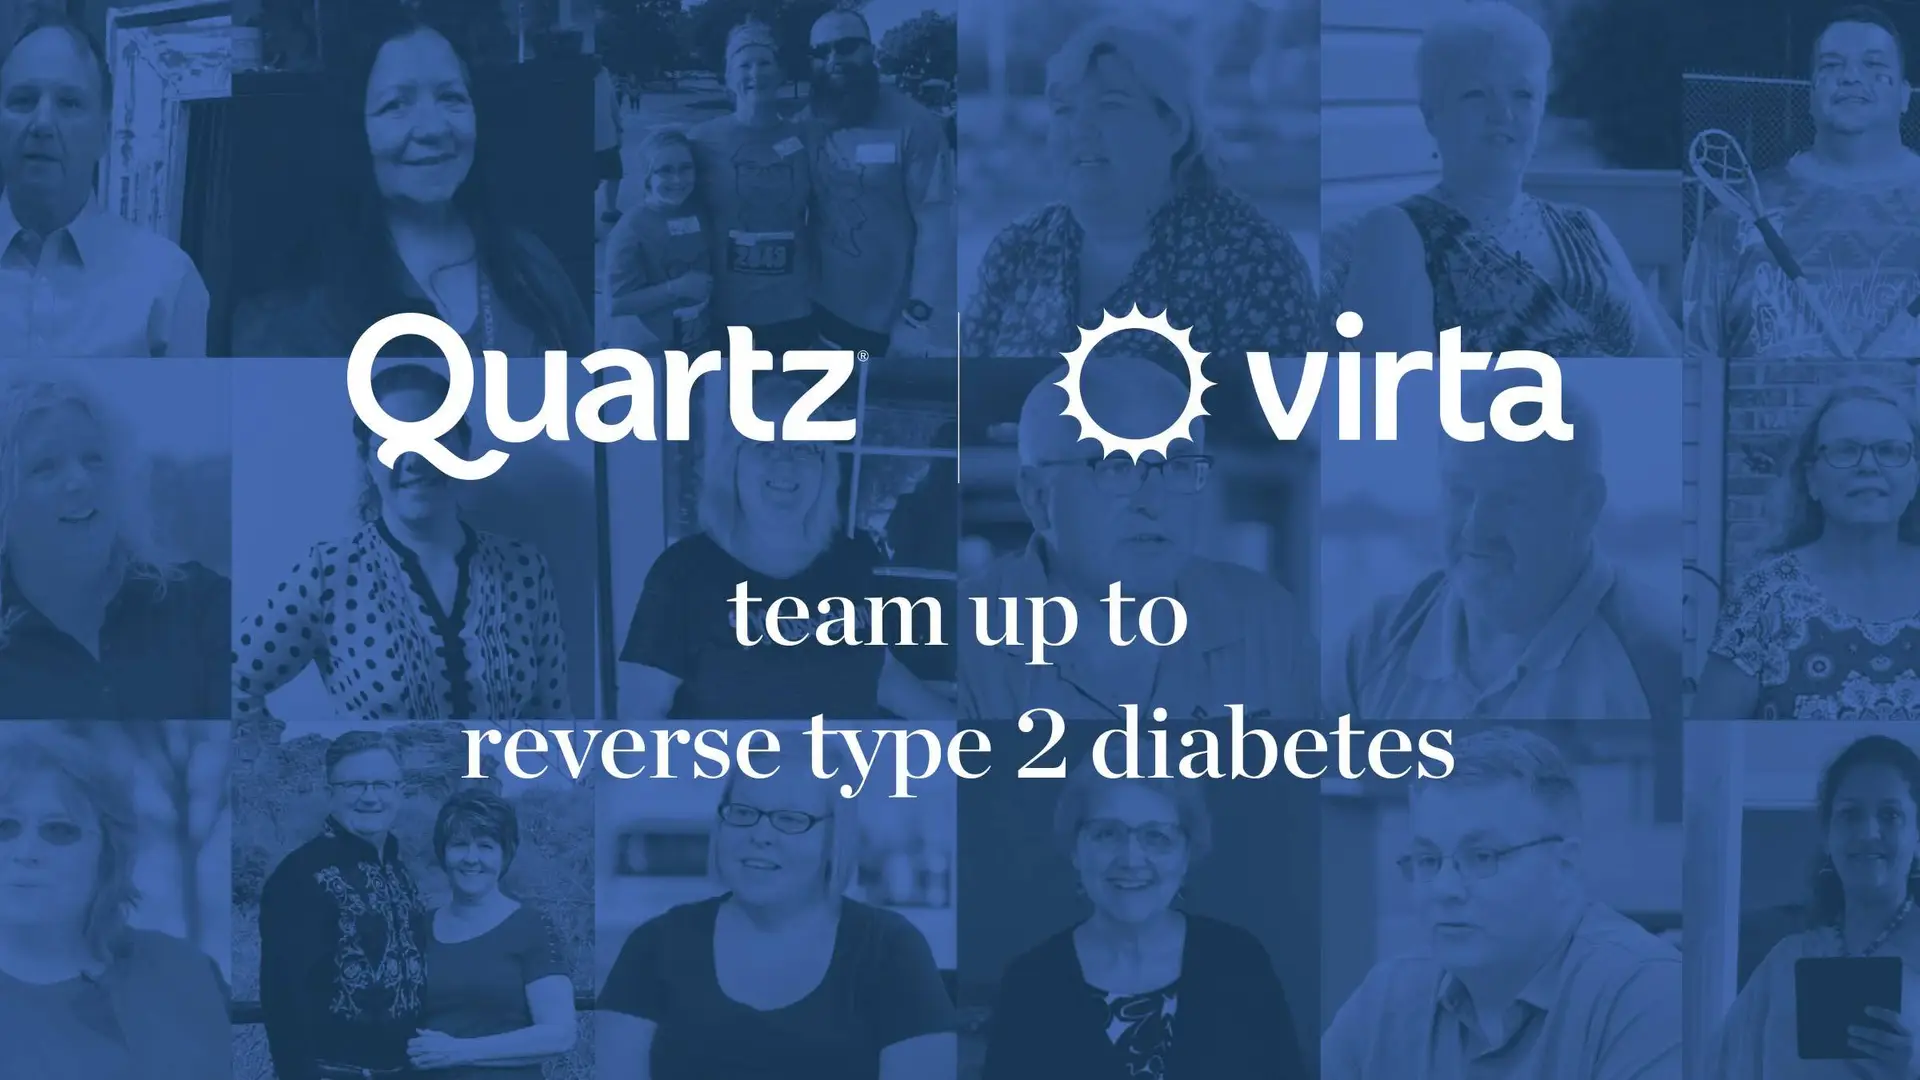 Quartz Virta logo - Team up to reverse type 2 diabetes with images of individuals